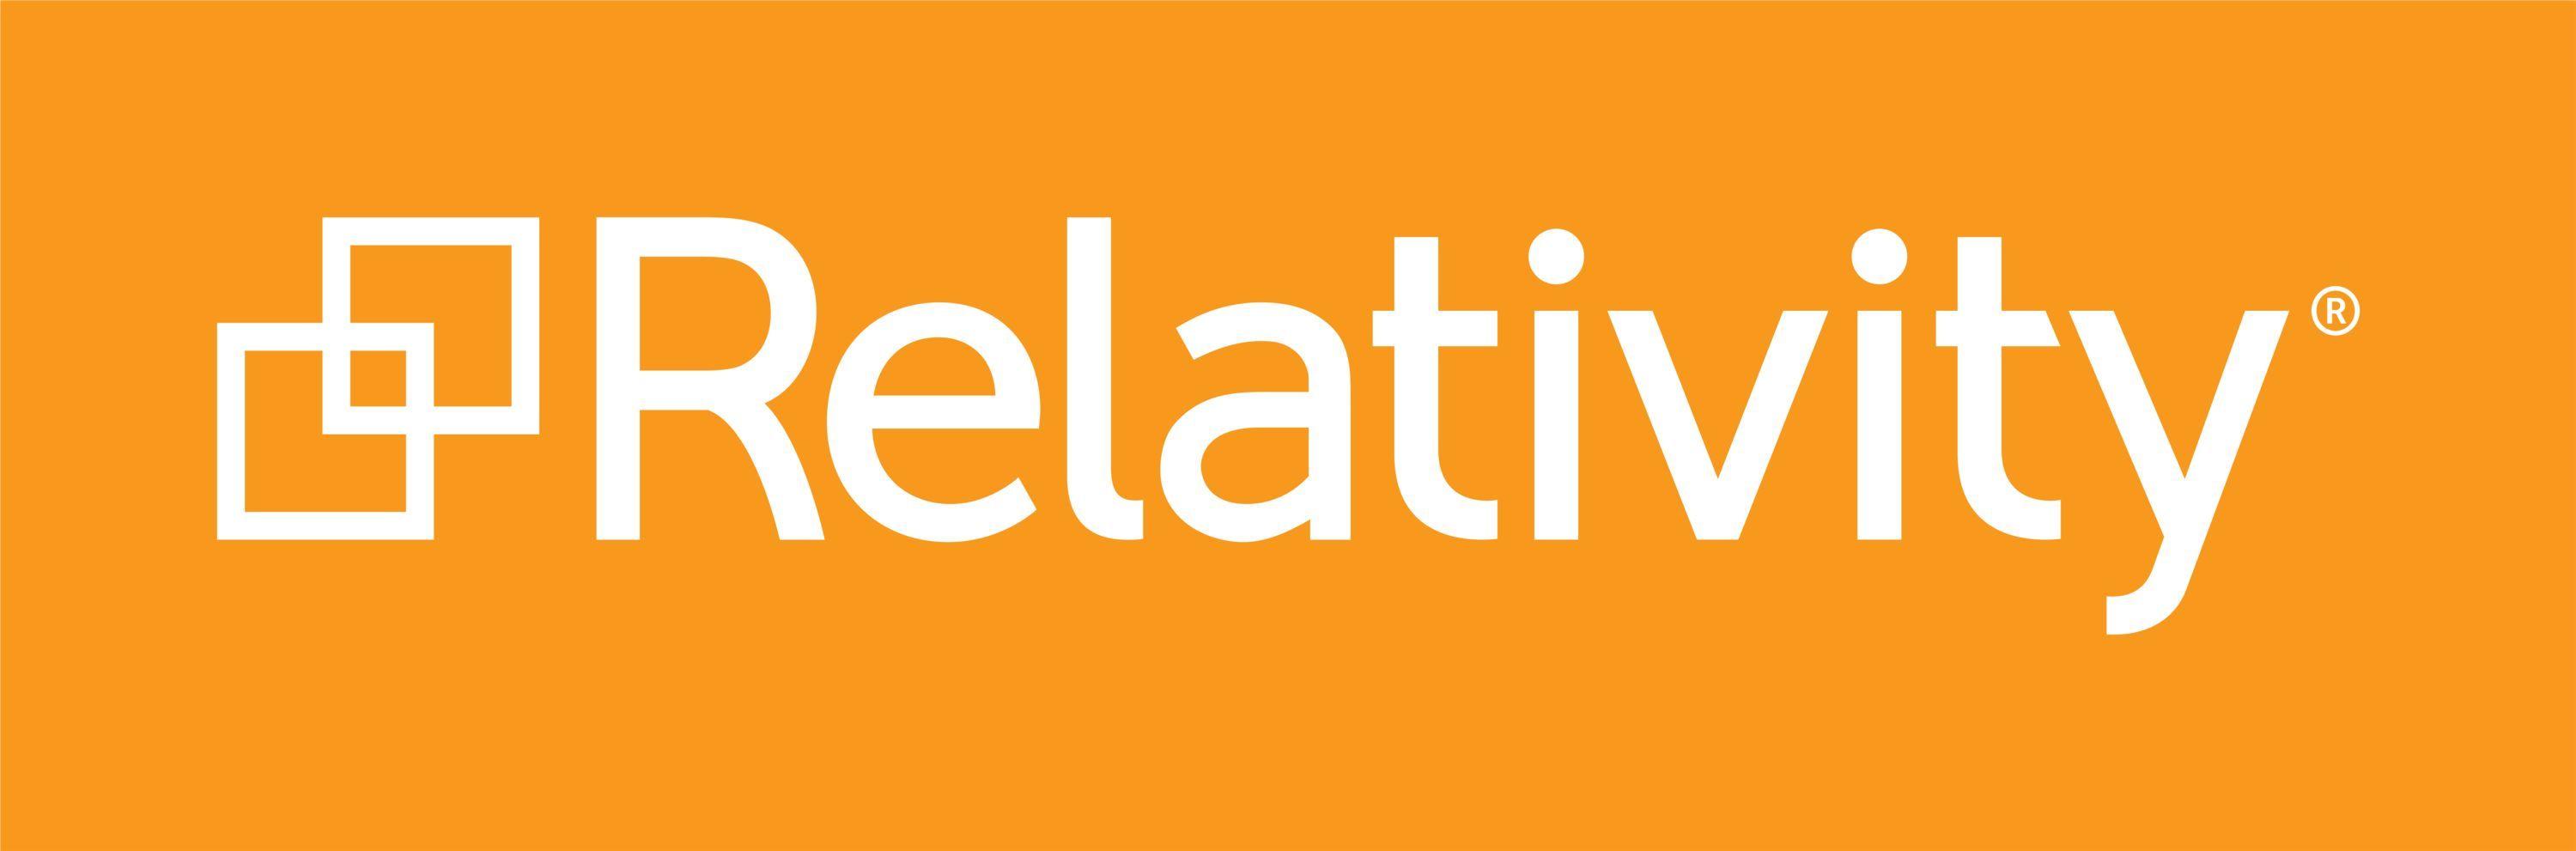 Relativity Logo - Media Gallery & Brand Guide | Relativity